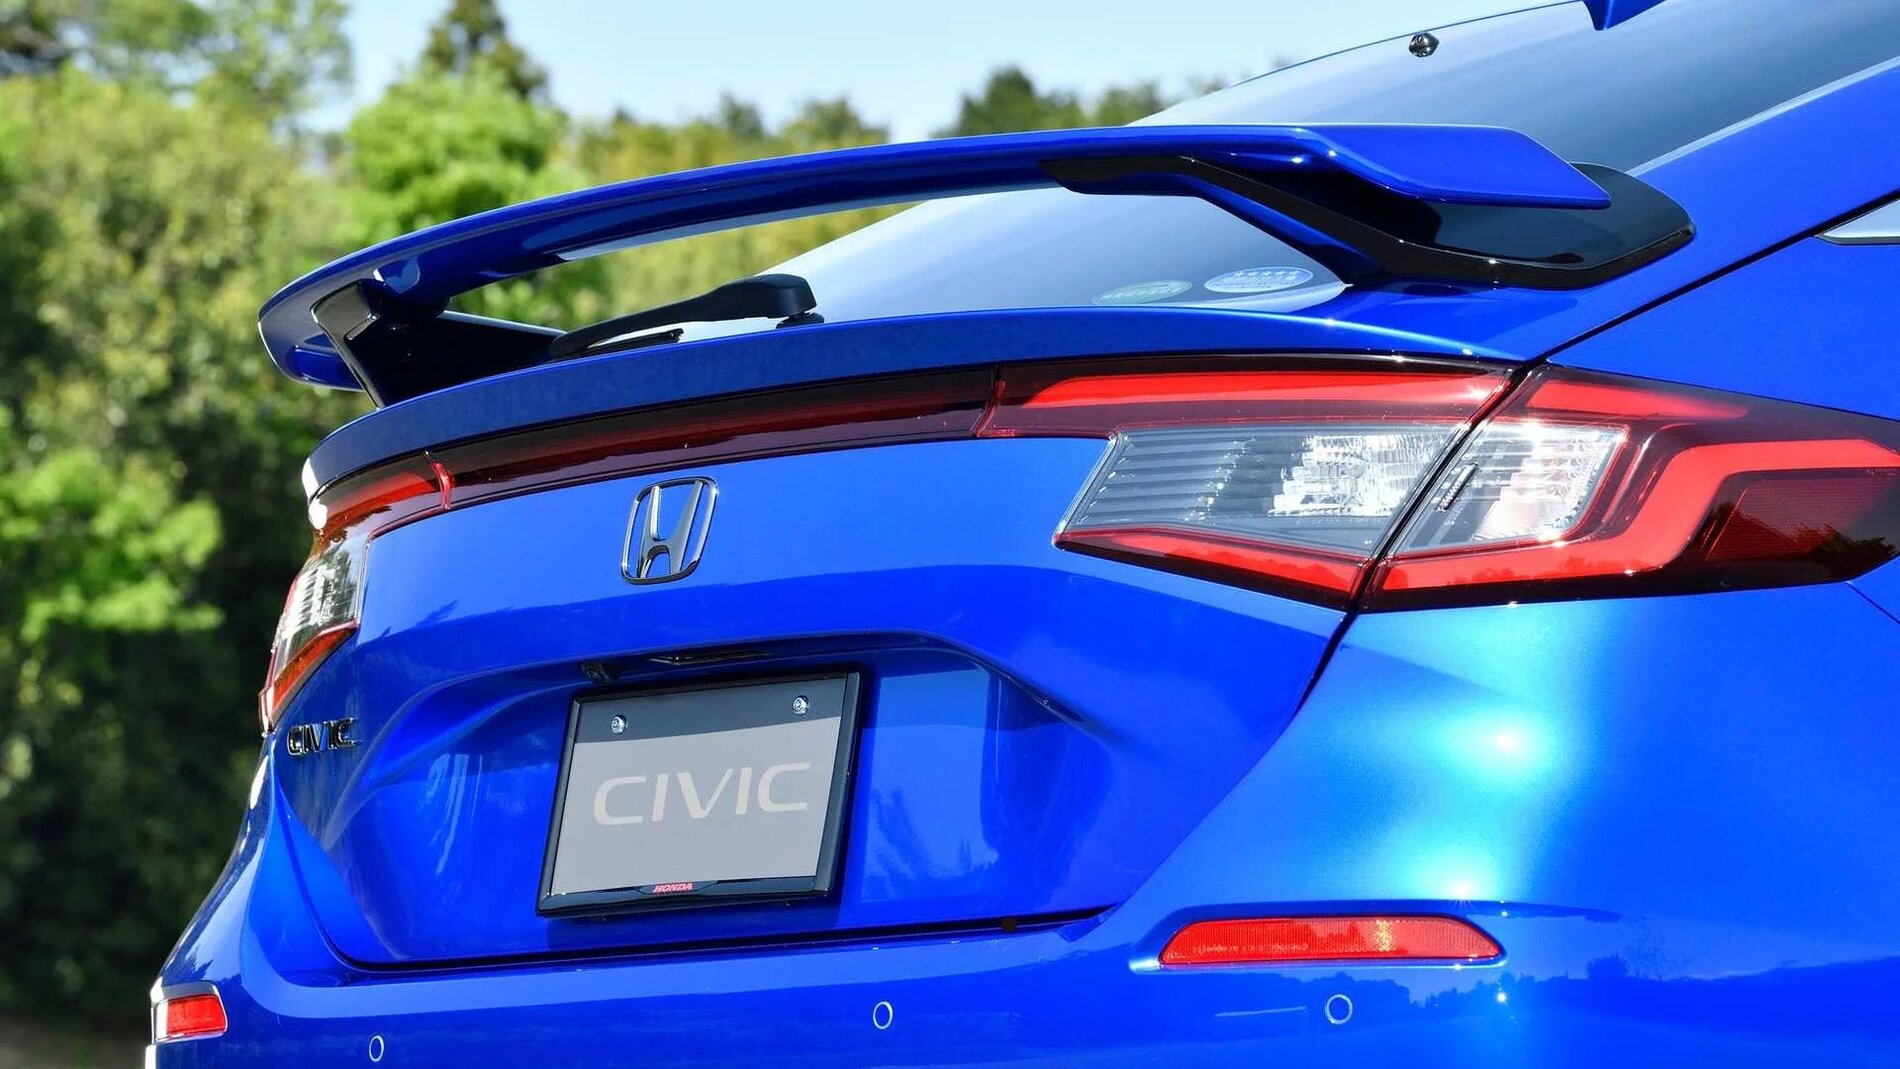 11th Gen Honda Civic More looks at accessories for 2022 Civic Hatchback 63399289d0b87dcb2da9819c8d6141f8